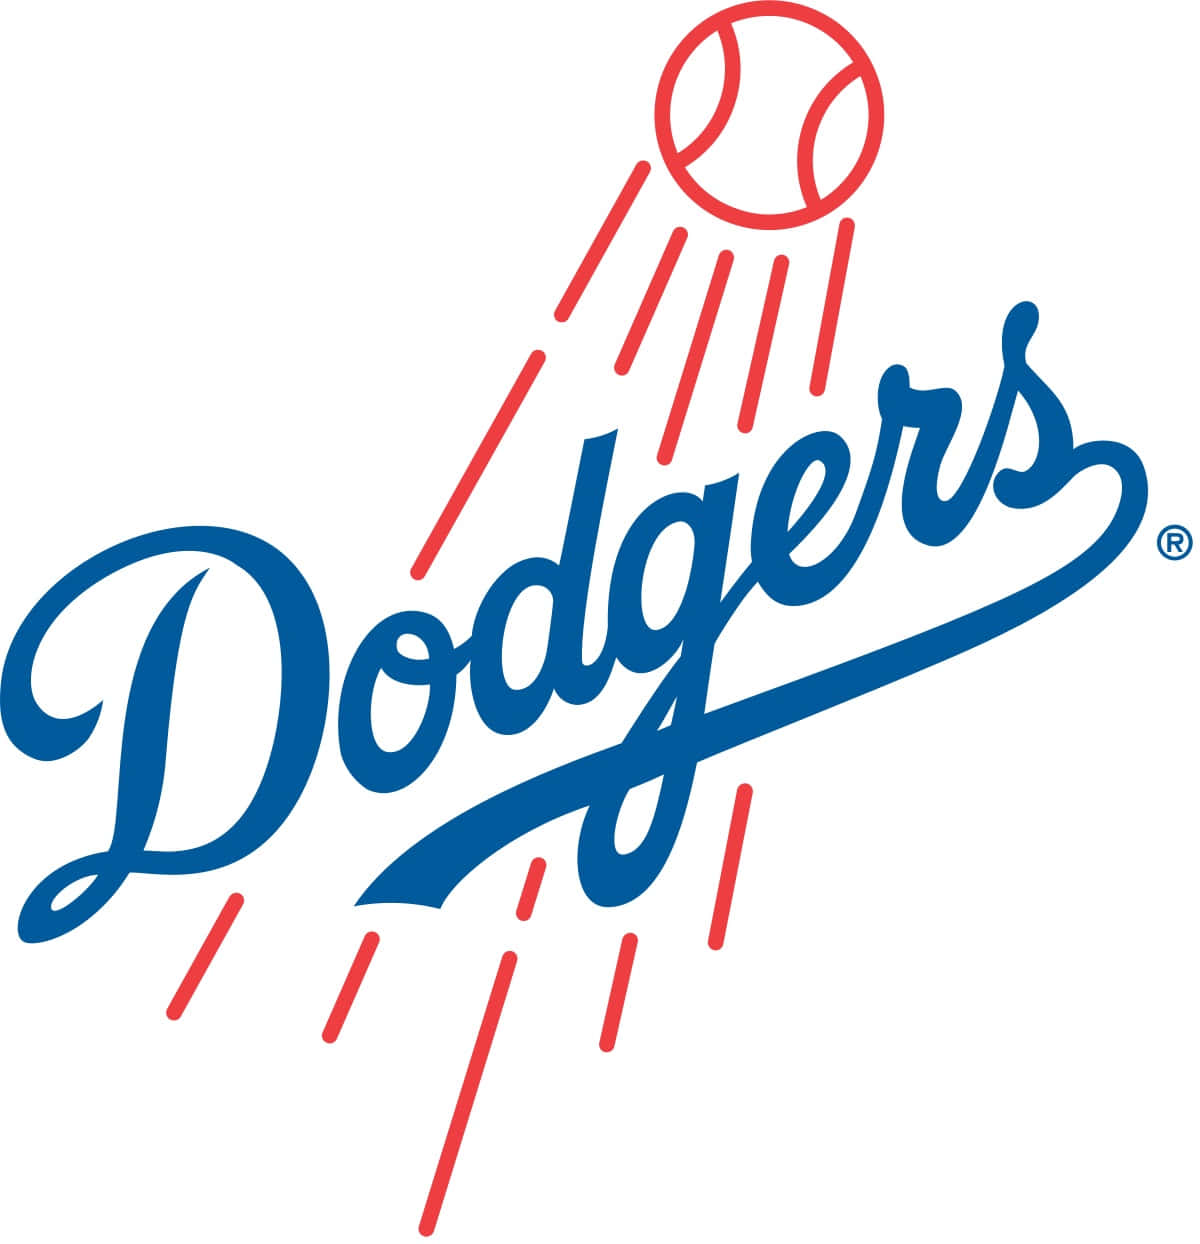 Losangeles Dodgers: Espíritu De Triunfo